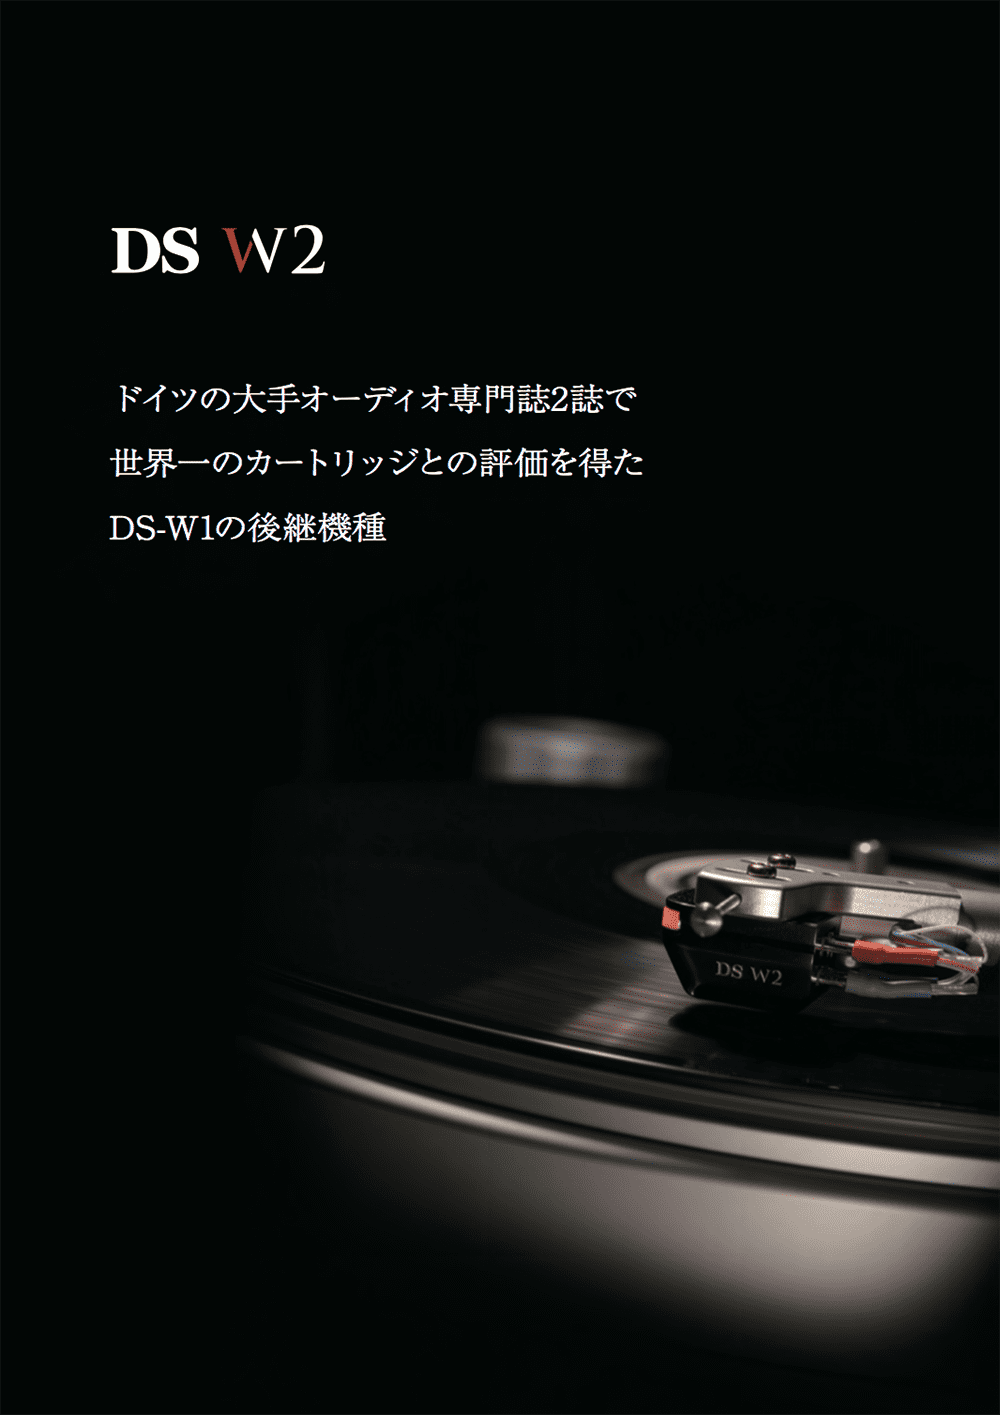 DS-W2 catalog